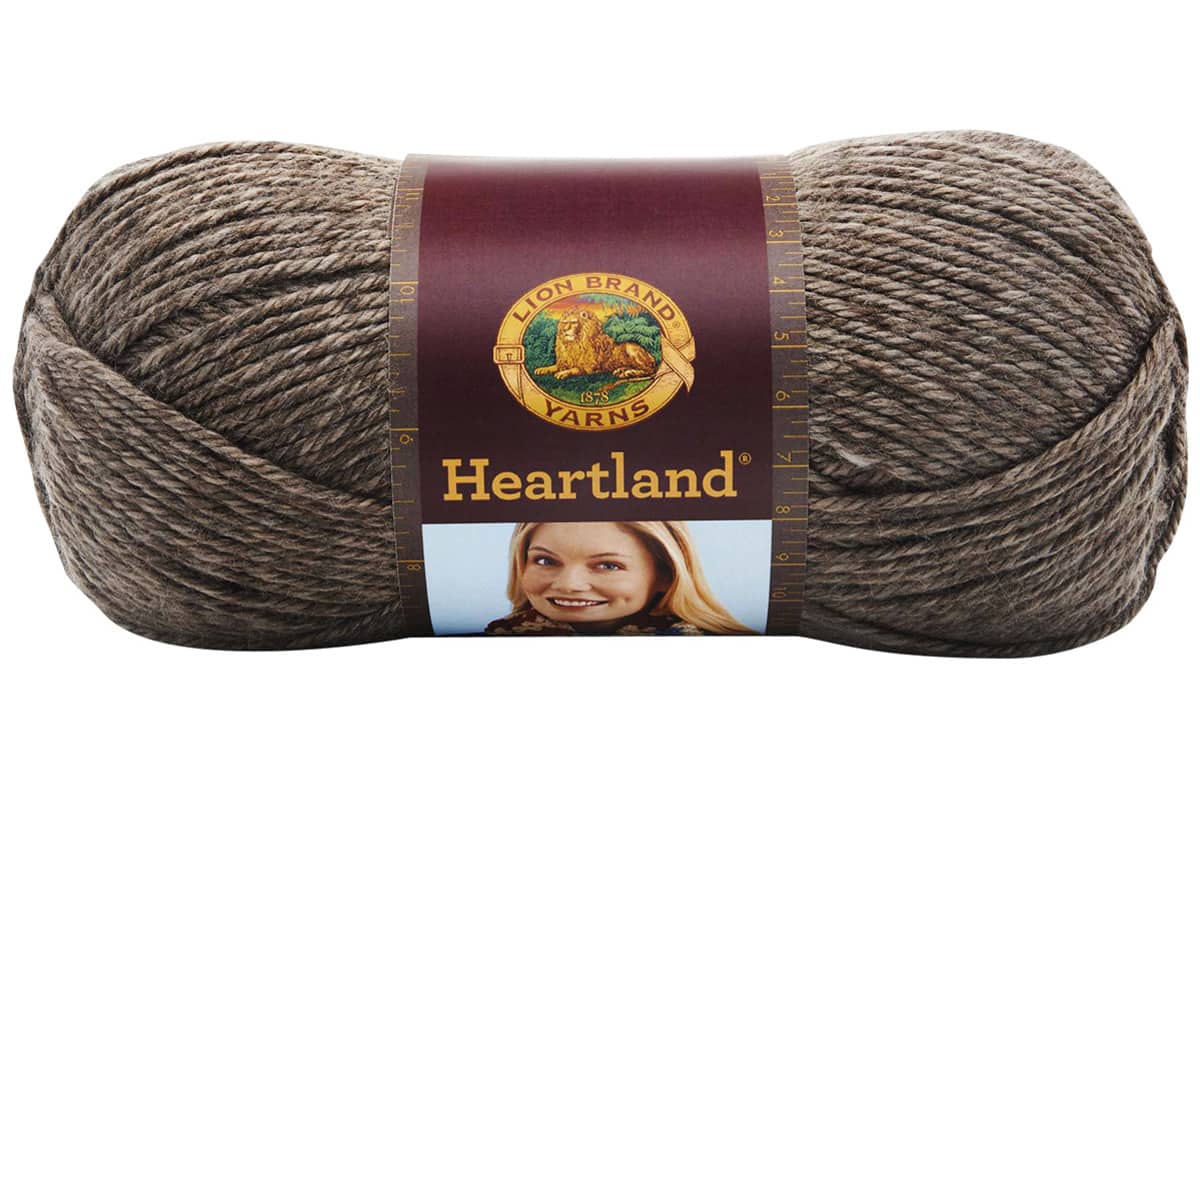 Lion Brand Heartland Yarn - Great Smoky Mountains, 1 ct - Kroger